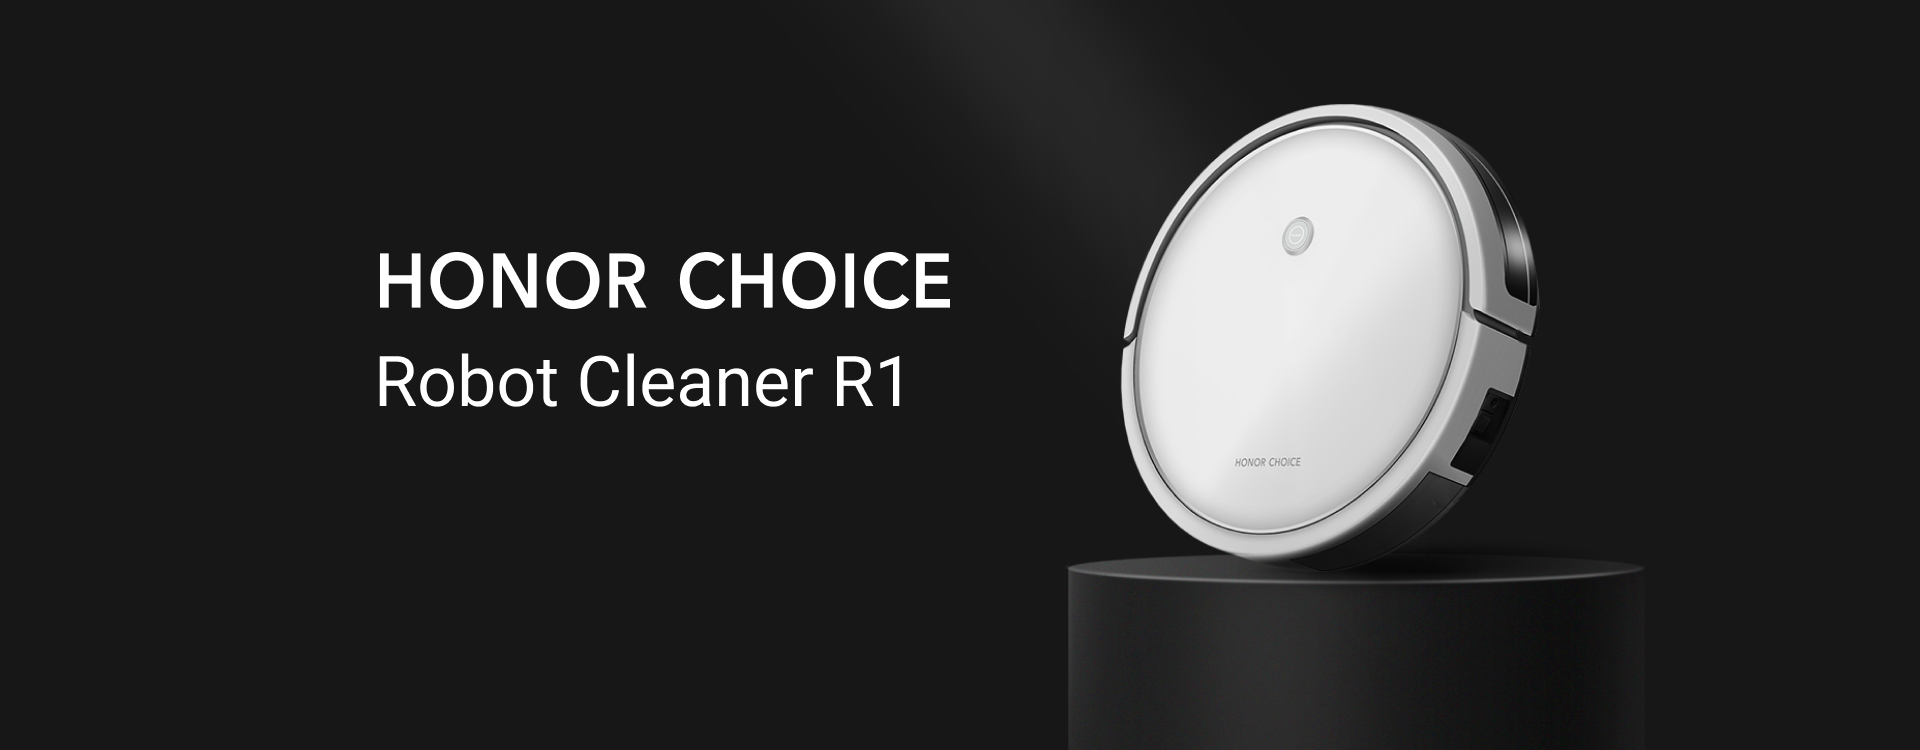 Honor choice 8. Робот пылесос хонор choice. Робот-пылесос Honor choice Robot Cleaner r1. Робот пылесос хонор r1. Honor choice Cleaner r1.